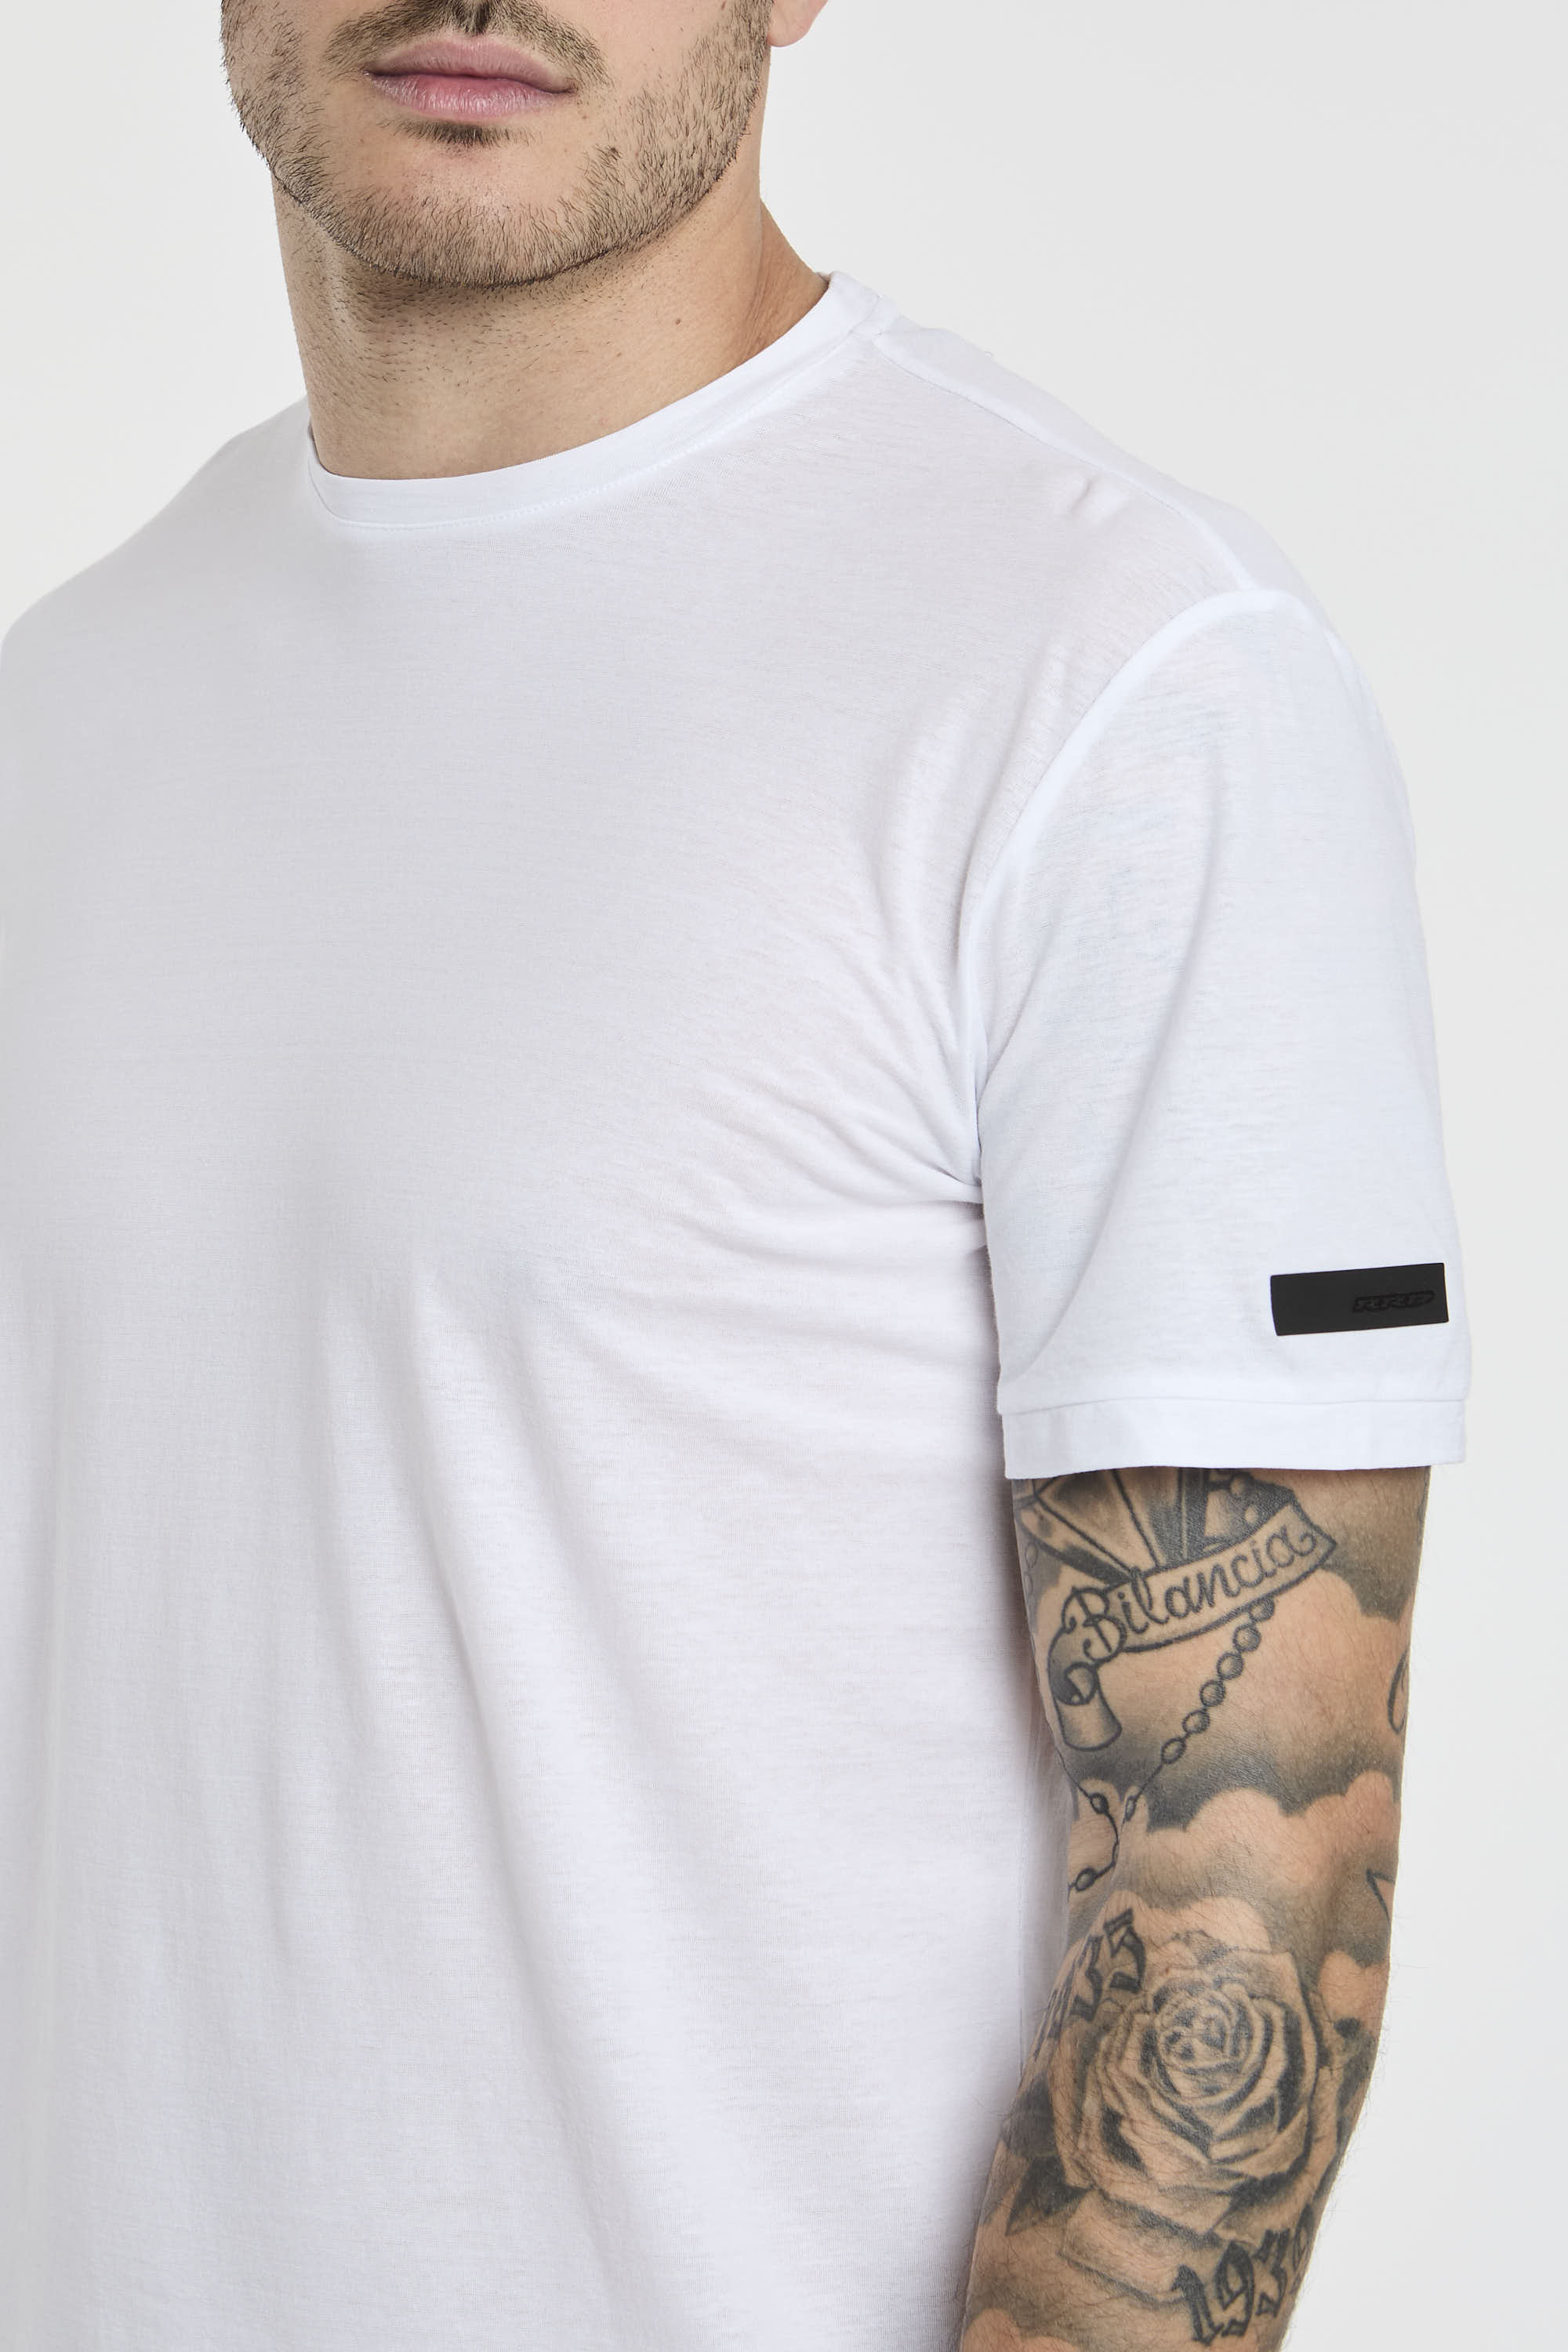 RRD T-shirt Crepe Shirty Cotton White-4